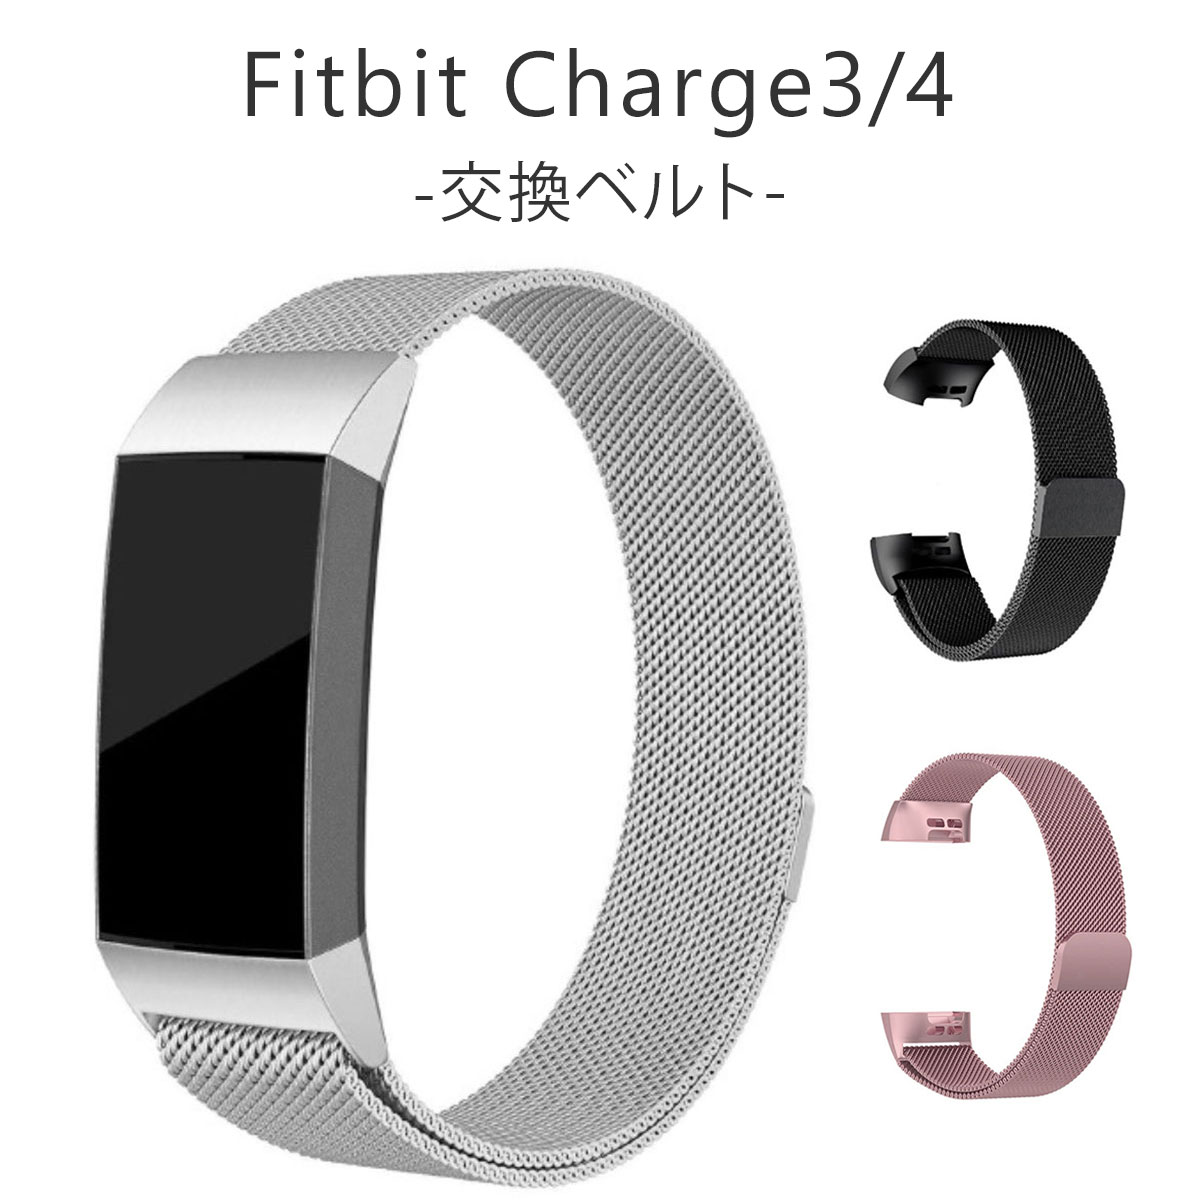 Fitbit 『3年保証』 Charge3 交換 バンド フィットビット チャージ3 今ならほぼ即納 ベルト 4 対応 チャージ 3 Charge4 互換品 ステンレス